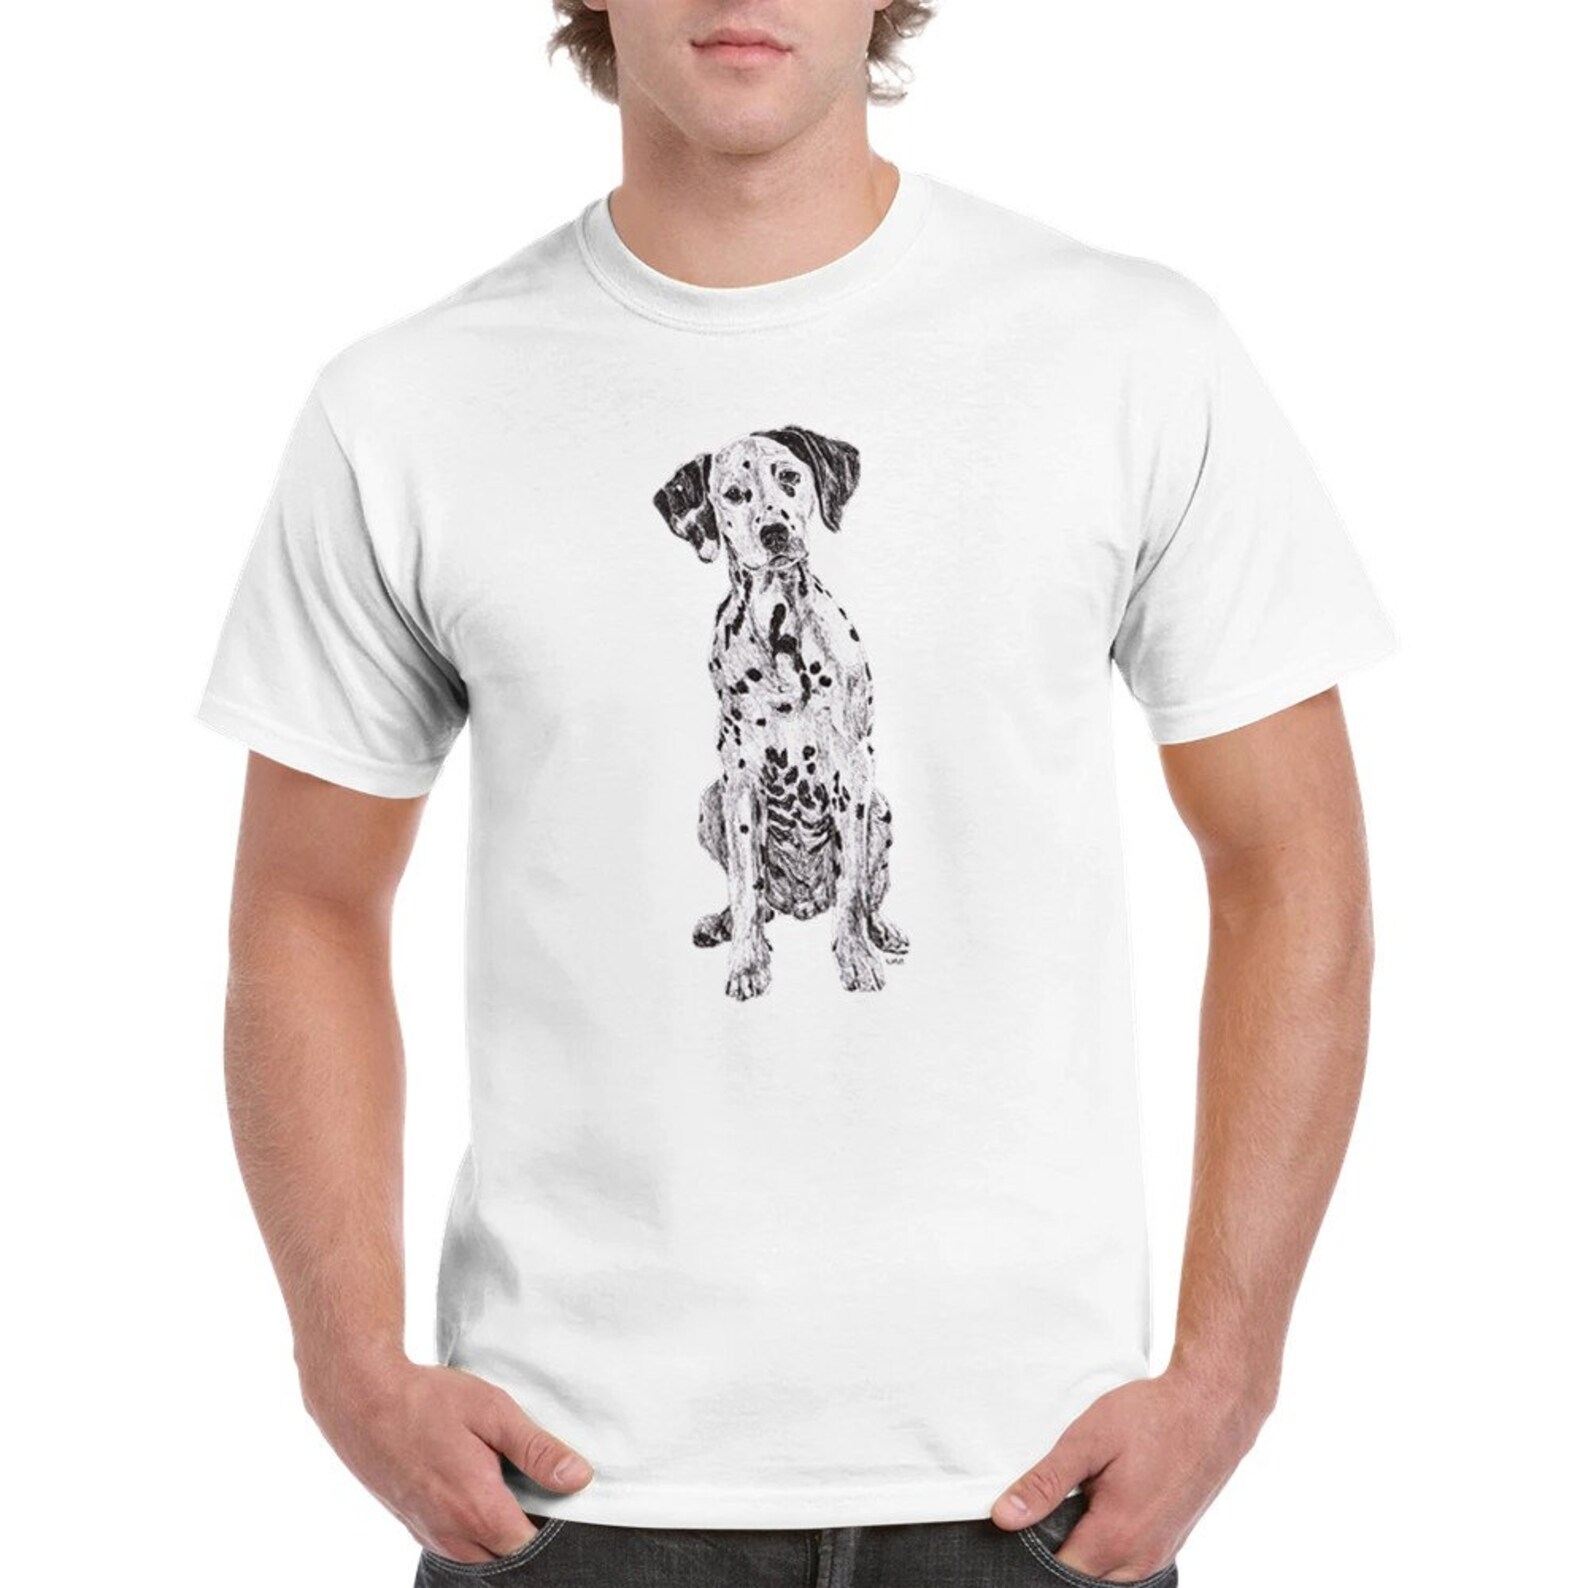 Dalmatian t-shirt by Louisa Hill